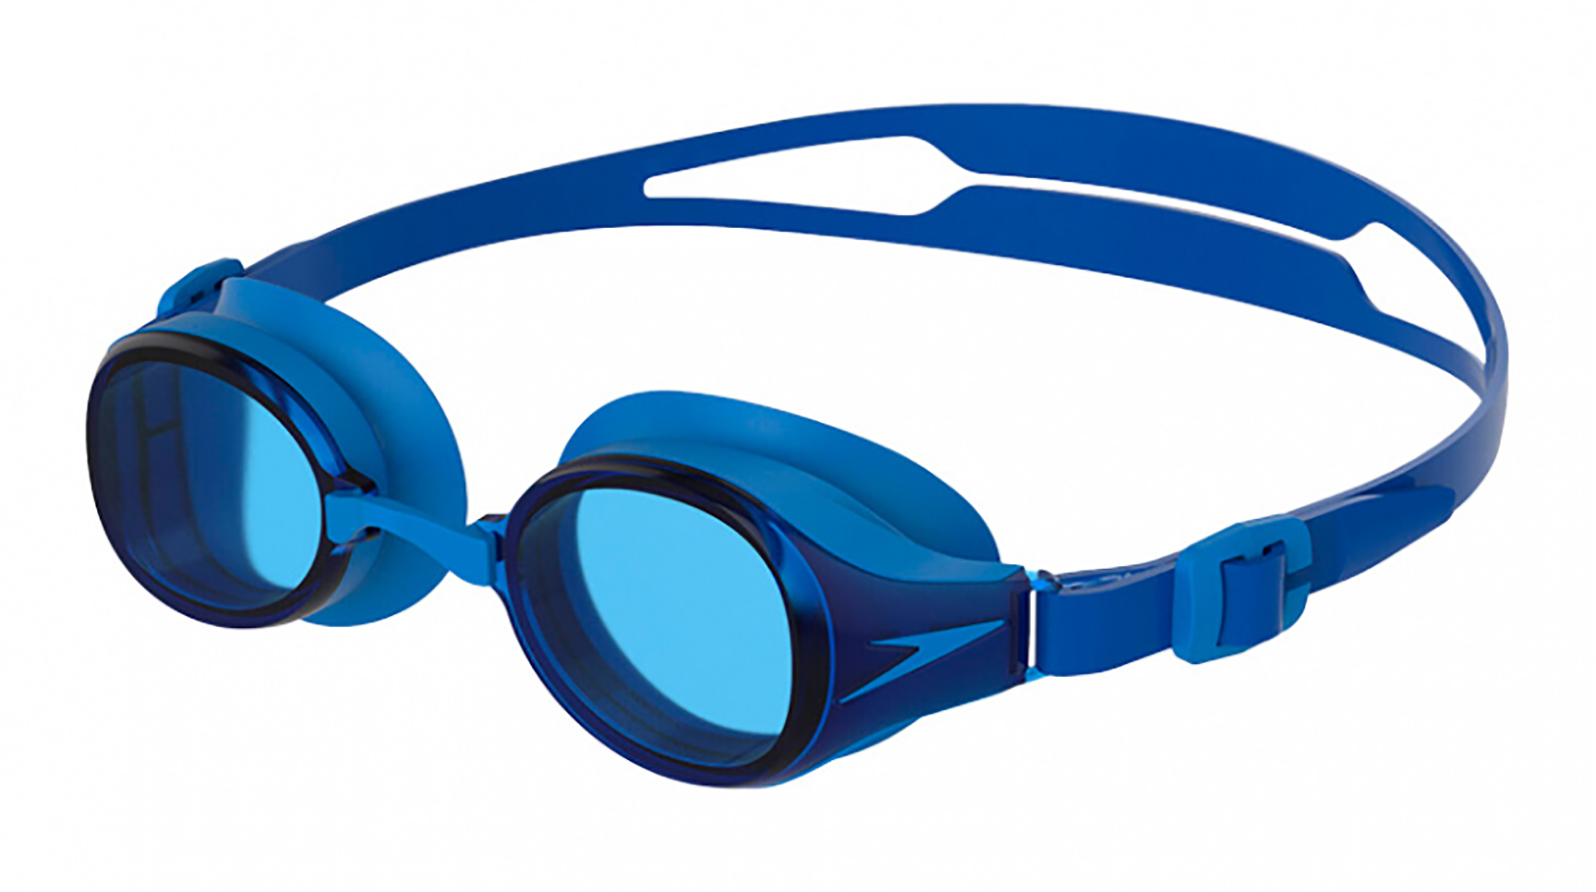 Speedo Очки для плавания Hydropure Optical F809 -5.0 speedo очки для плавания hydropure optical f809 3 5